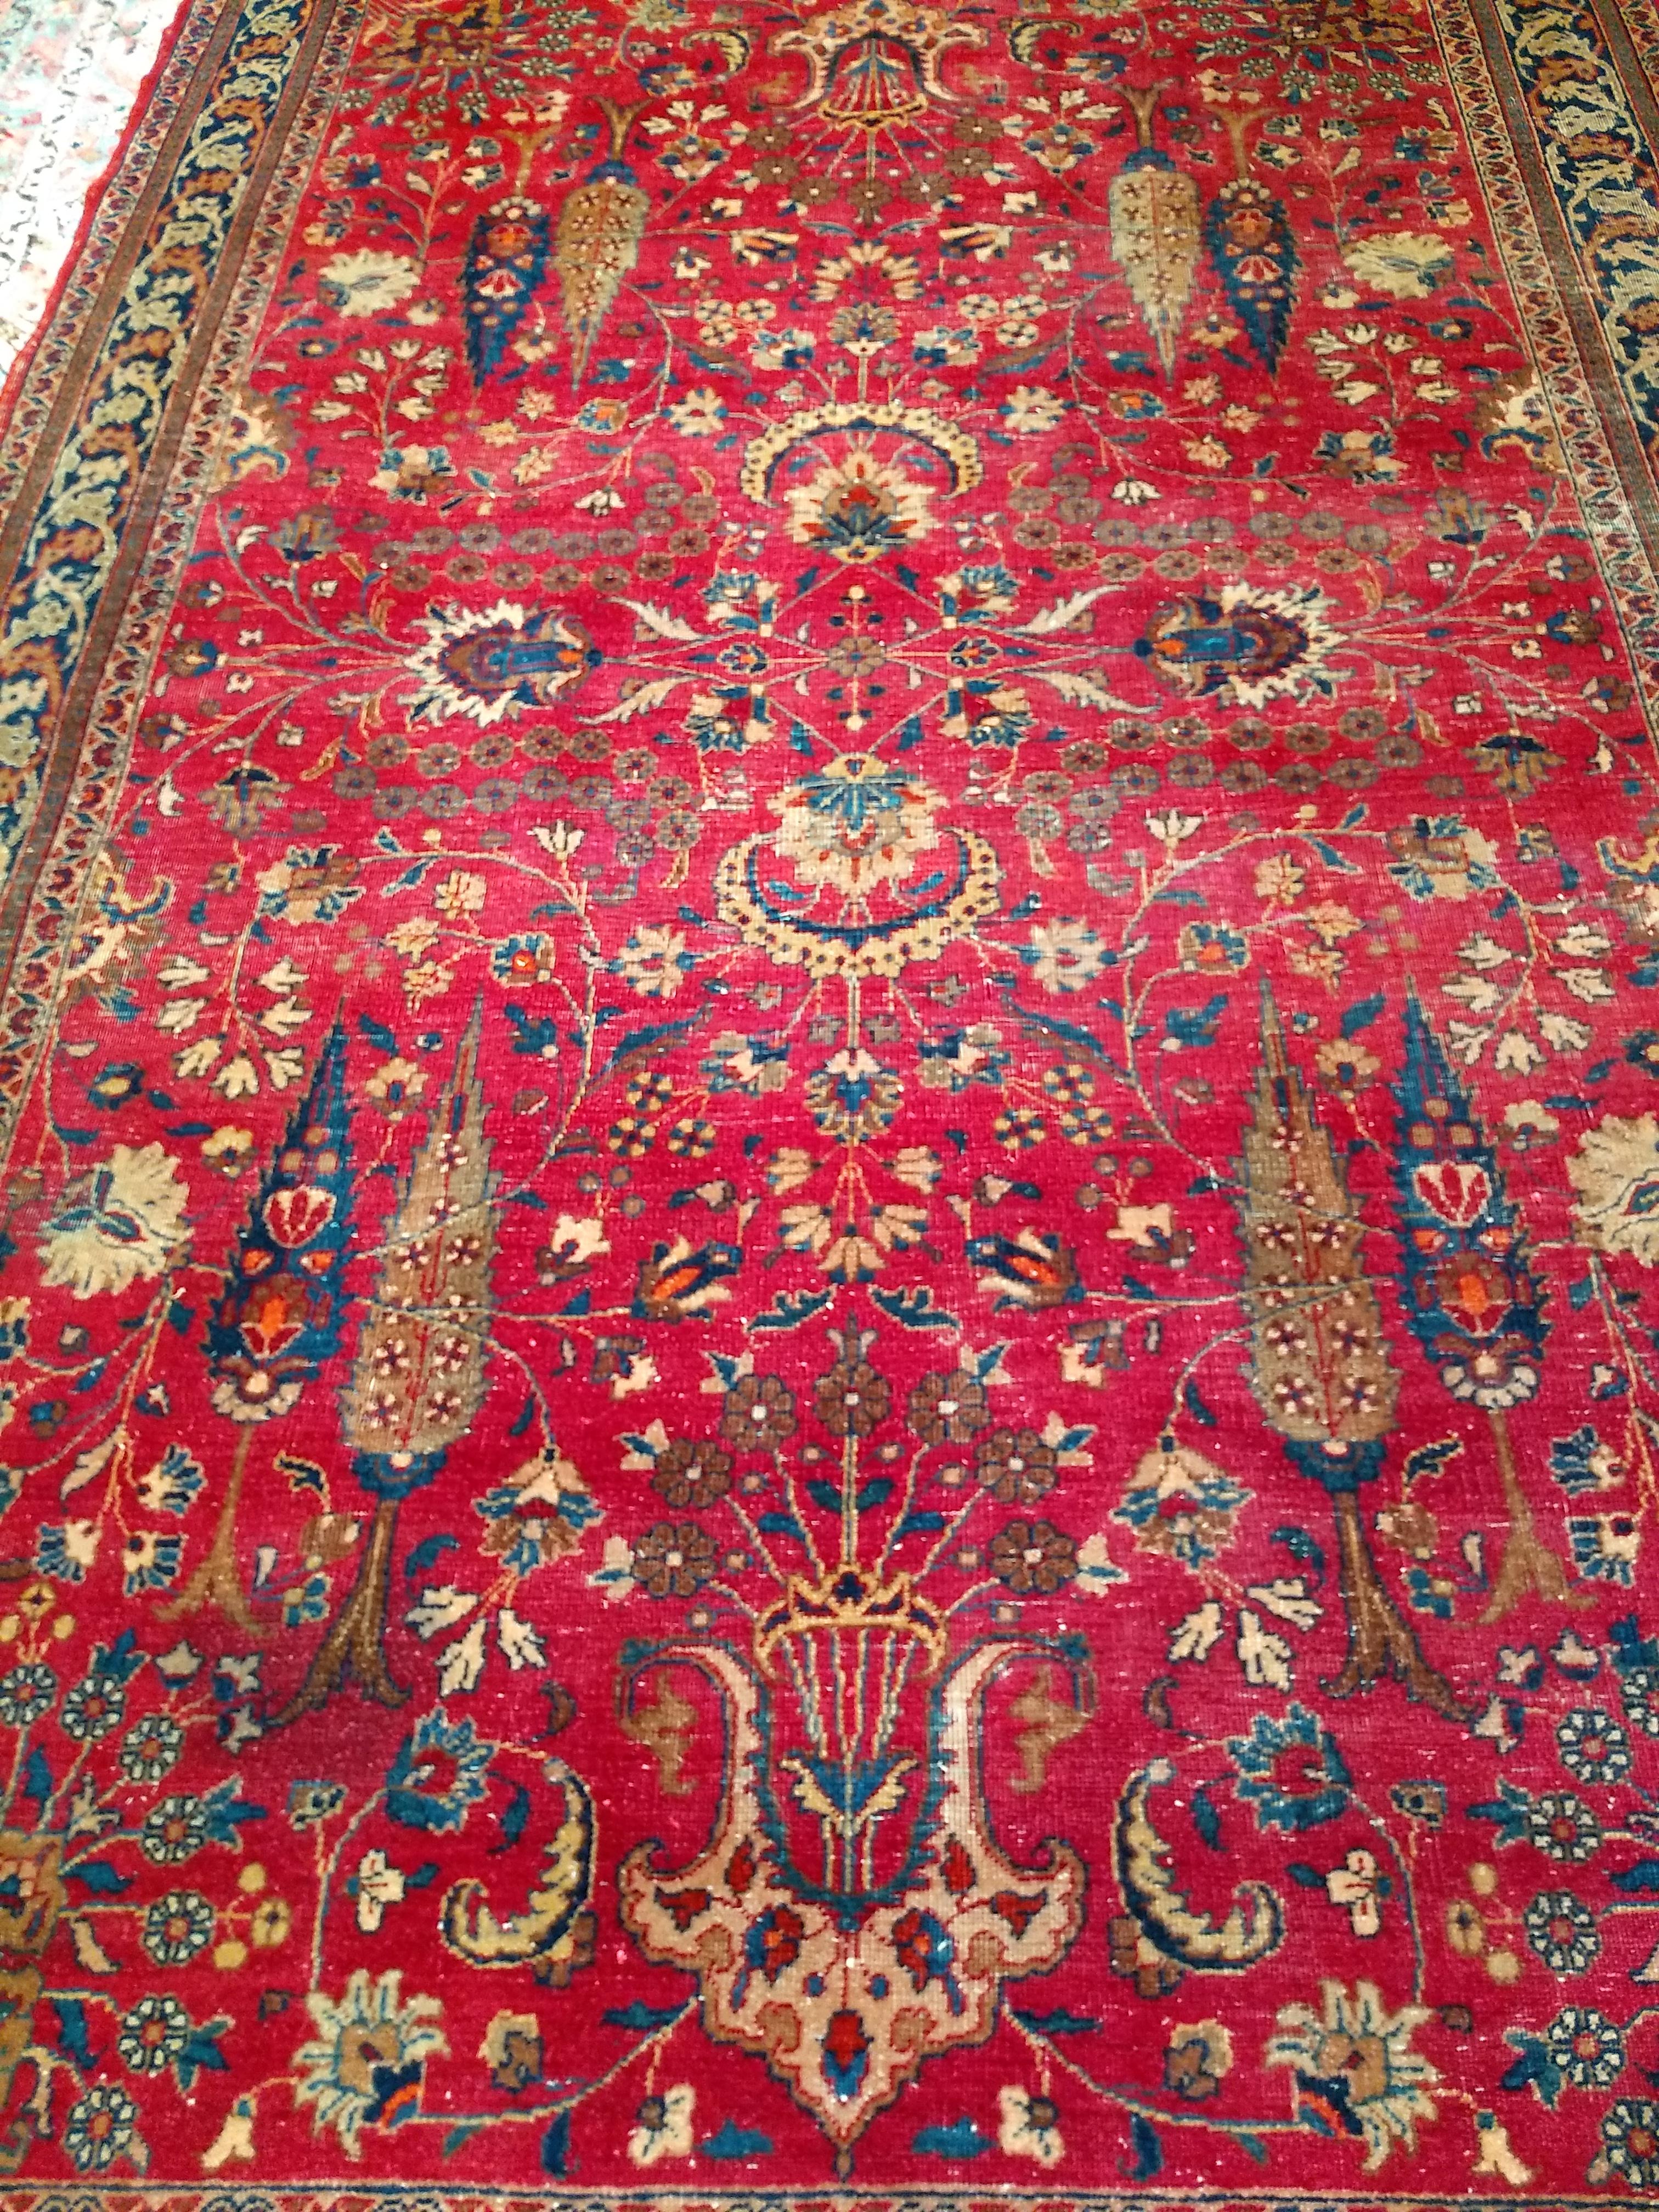 19th Century Persian Khorassan in Allover Floral Design in Crimson Red, Blue For Sale 3